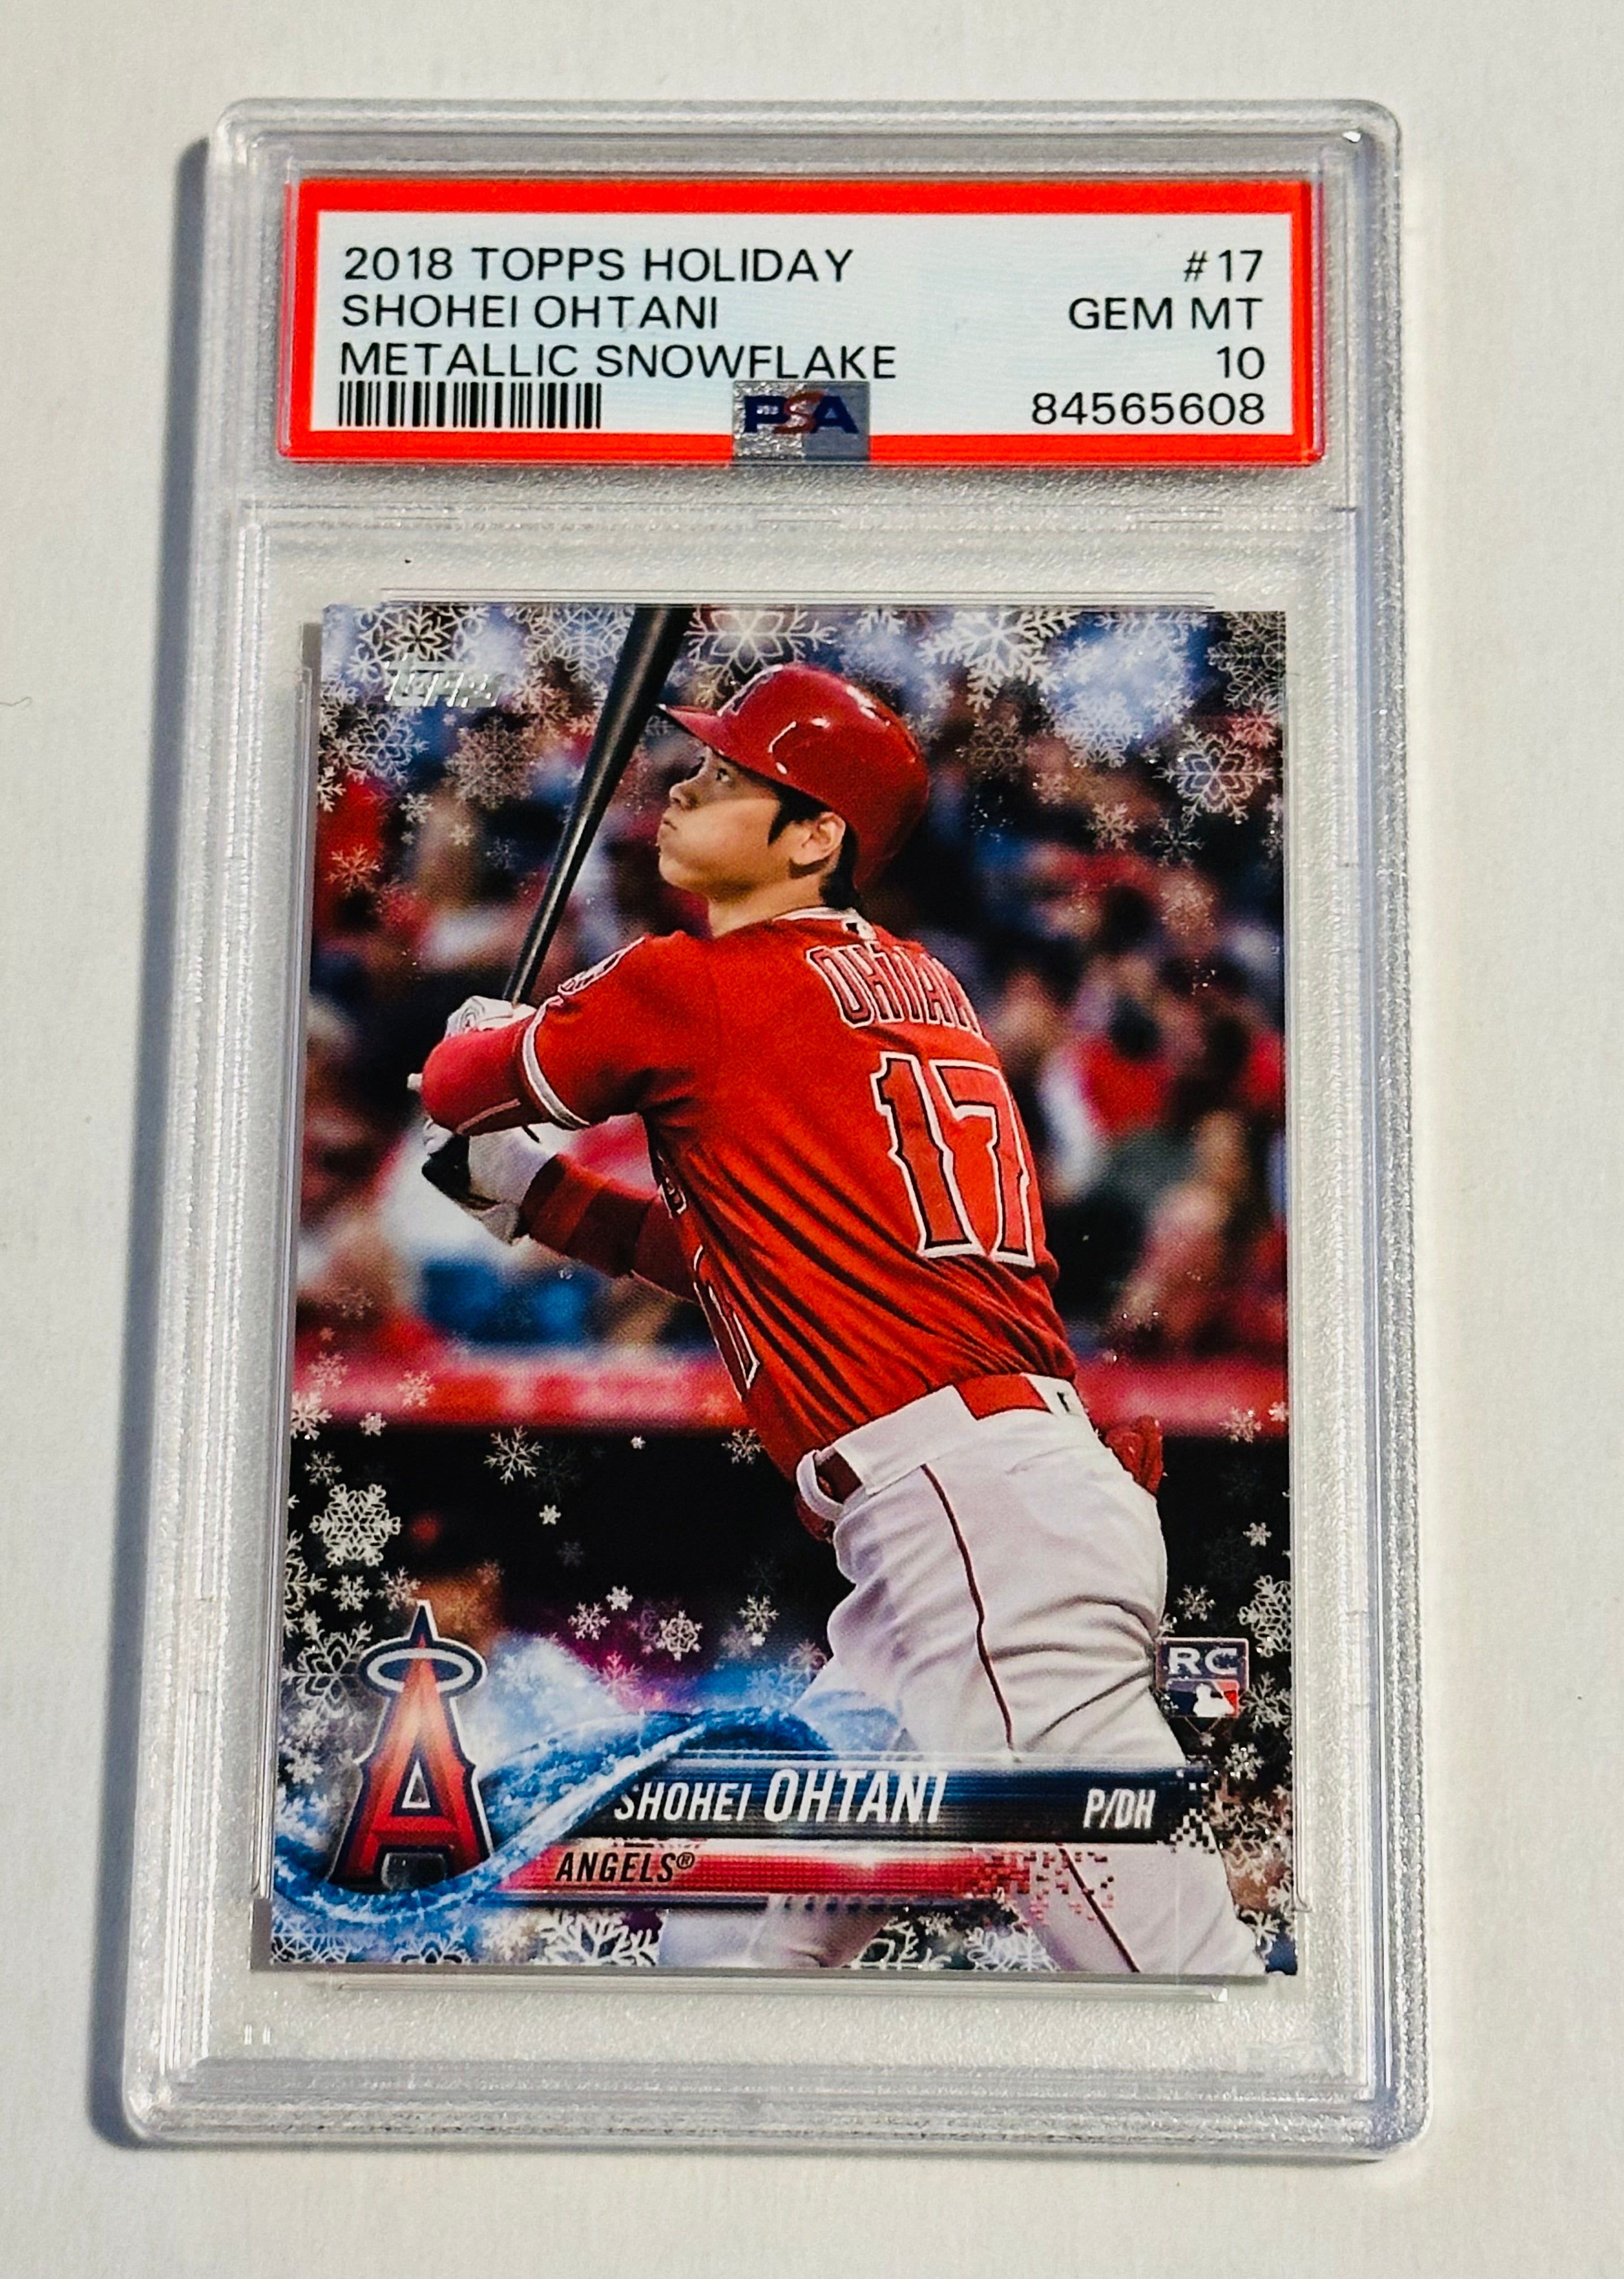 Shohei Ohtani Topps holiday metallic snowflake rookie baseball card PSA 10 , 2018